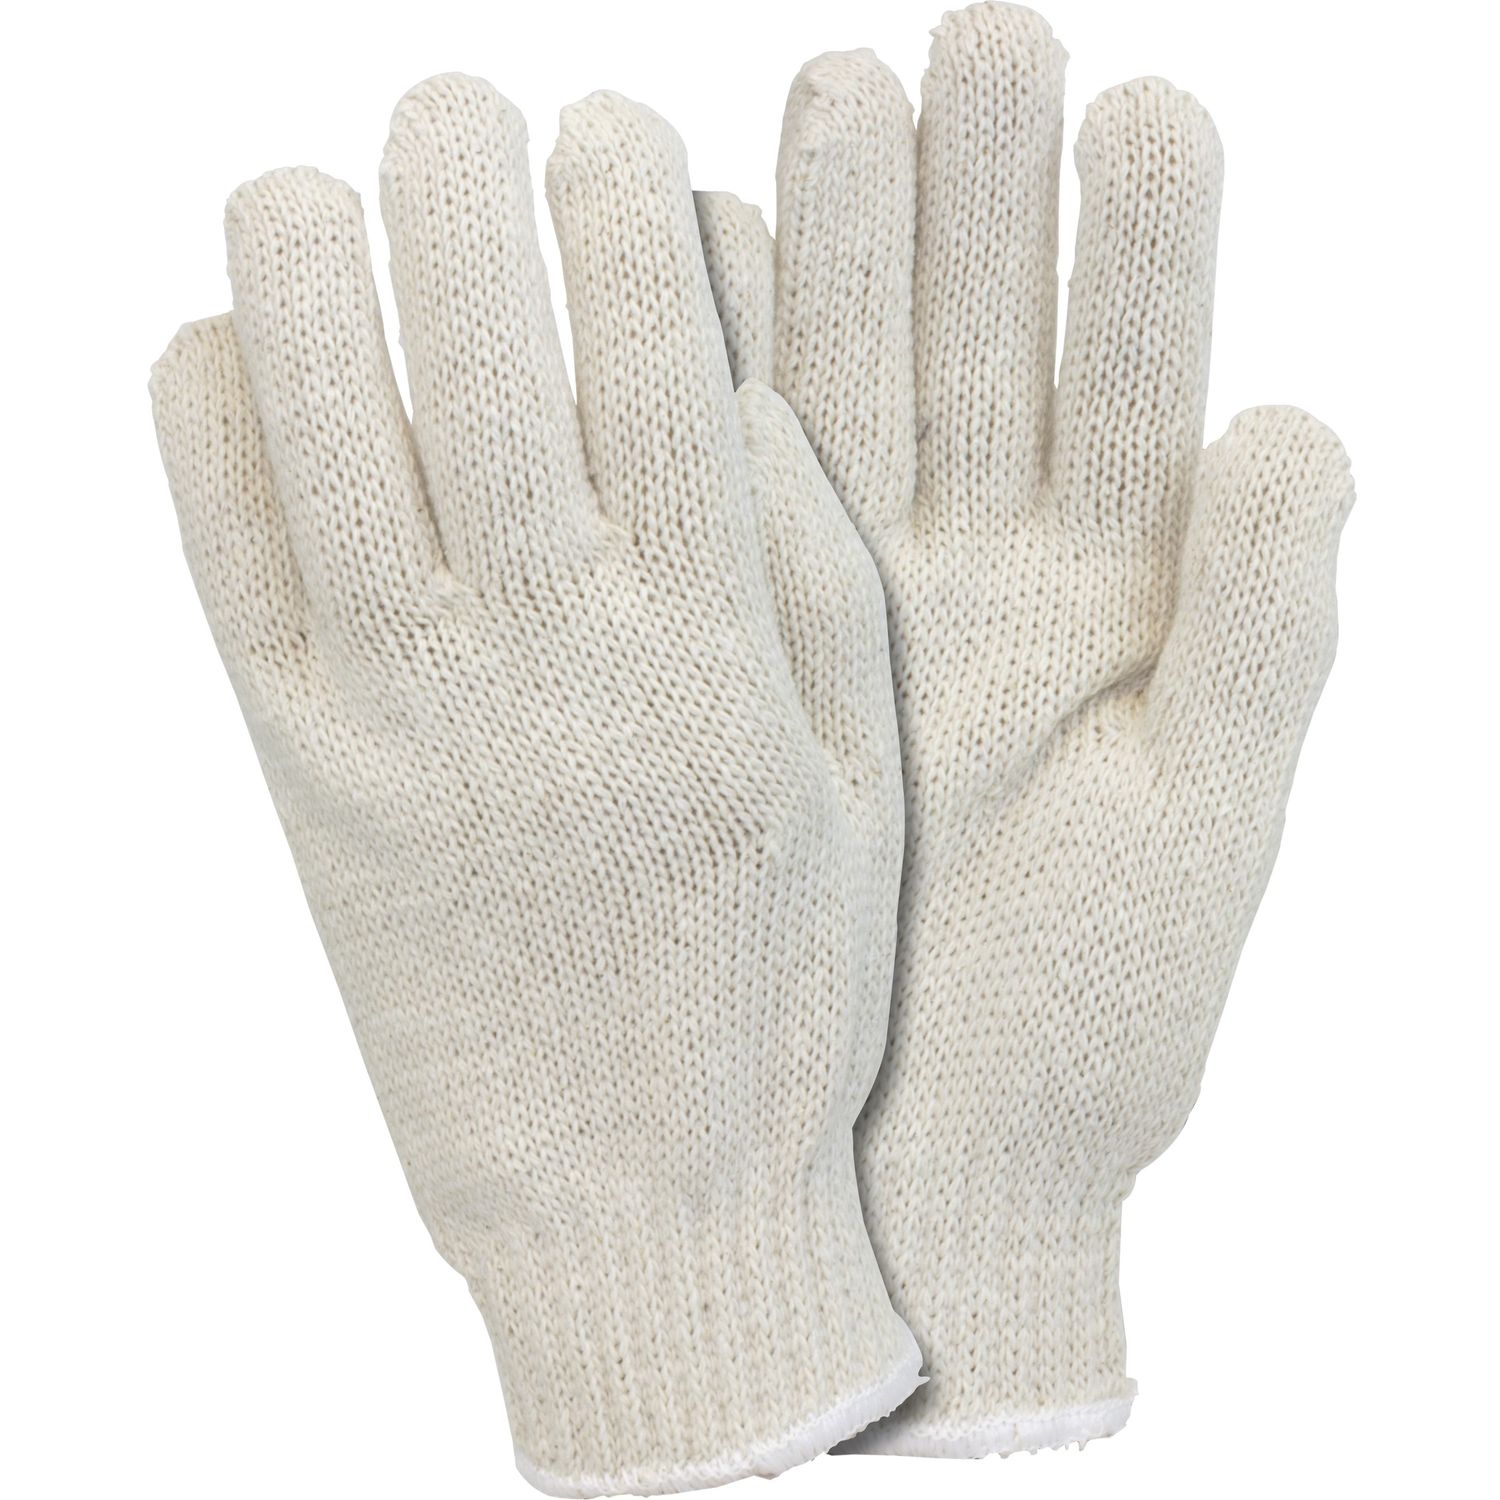 Medium Weight String Knit Gloves Male, Polyester Cotton, Mediumweight